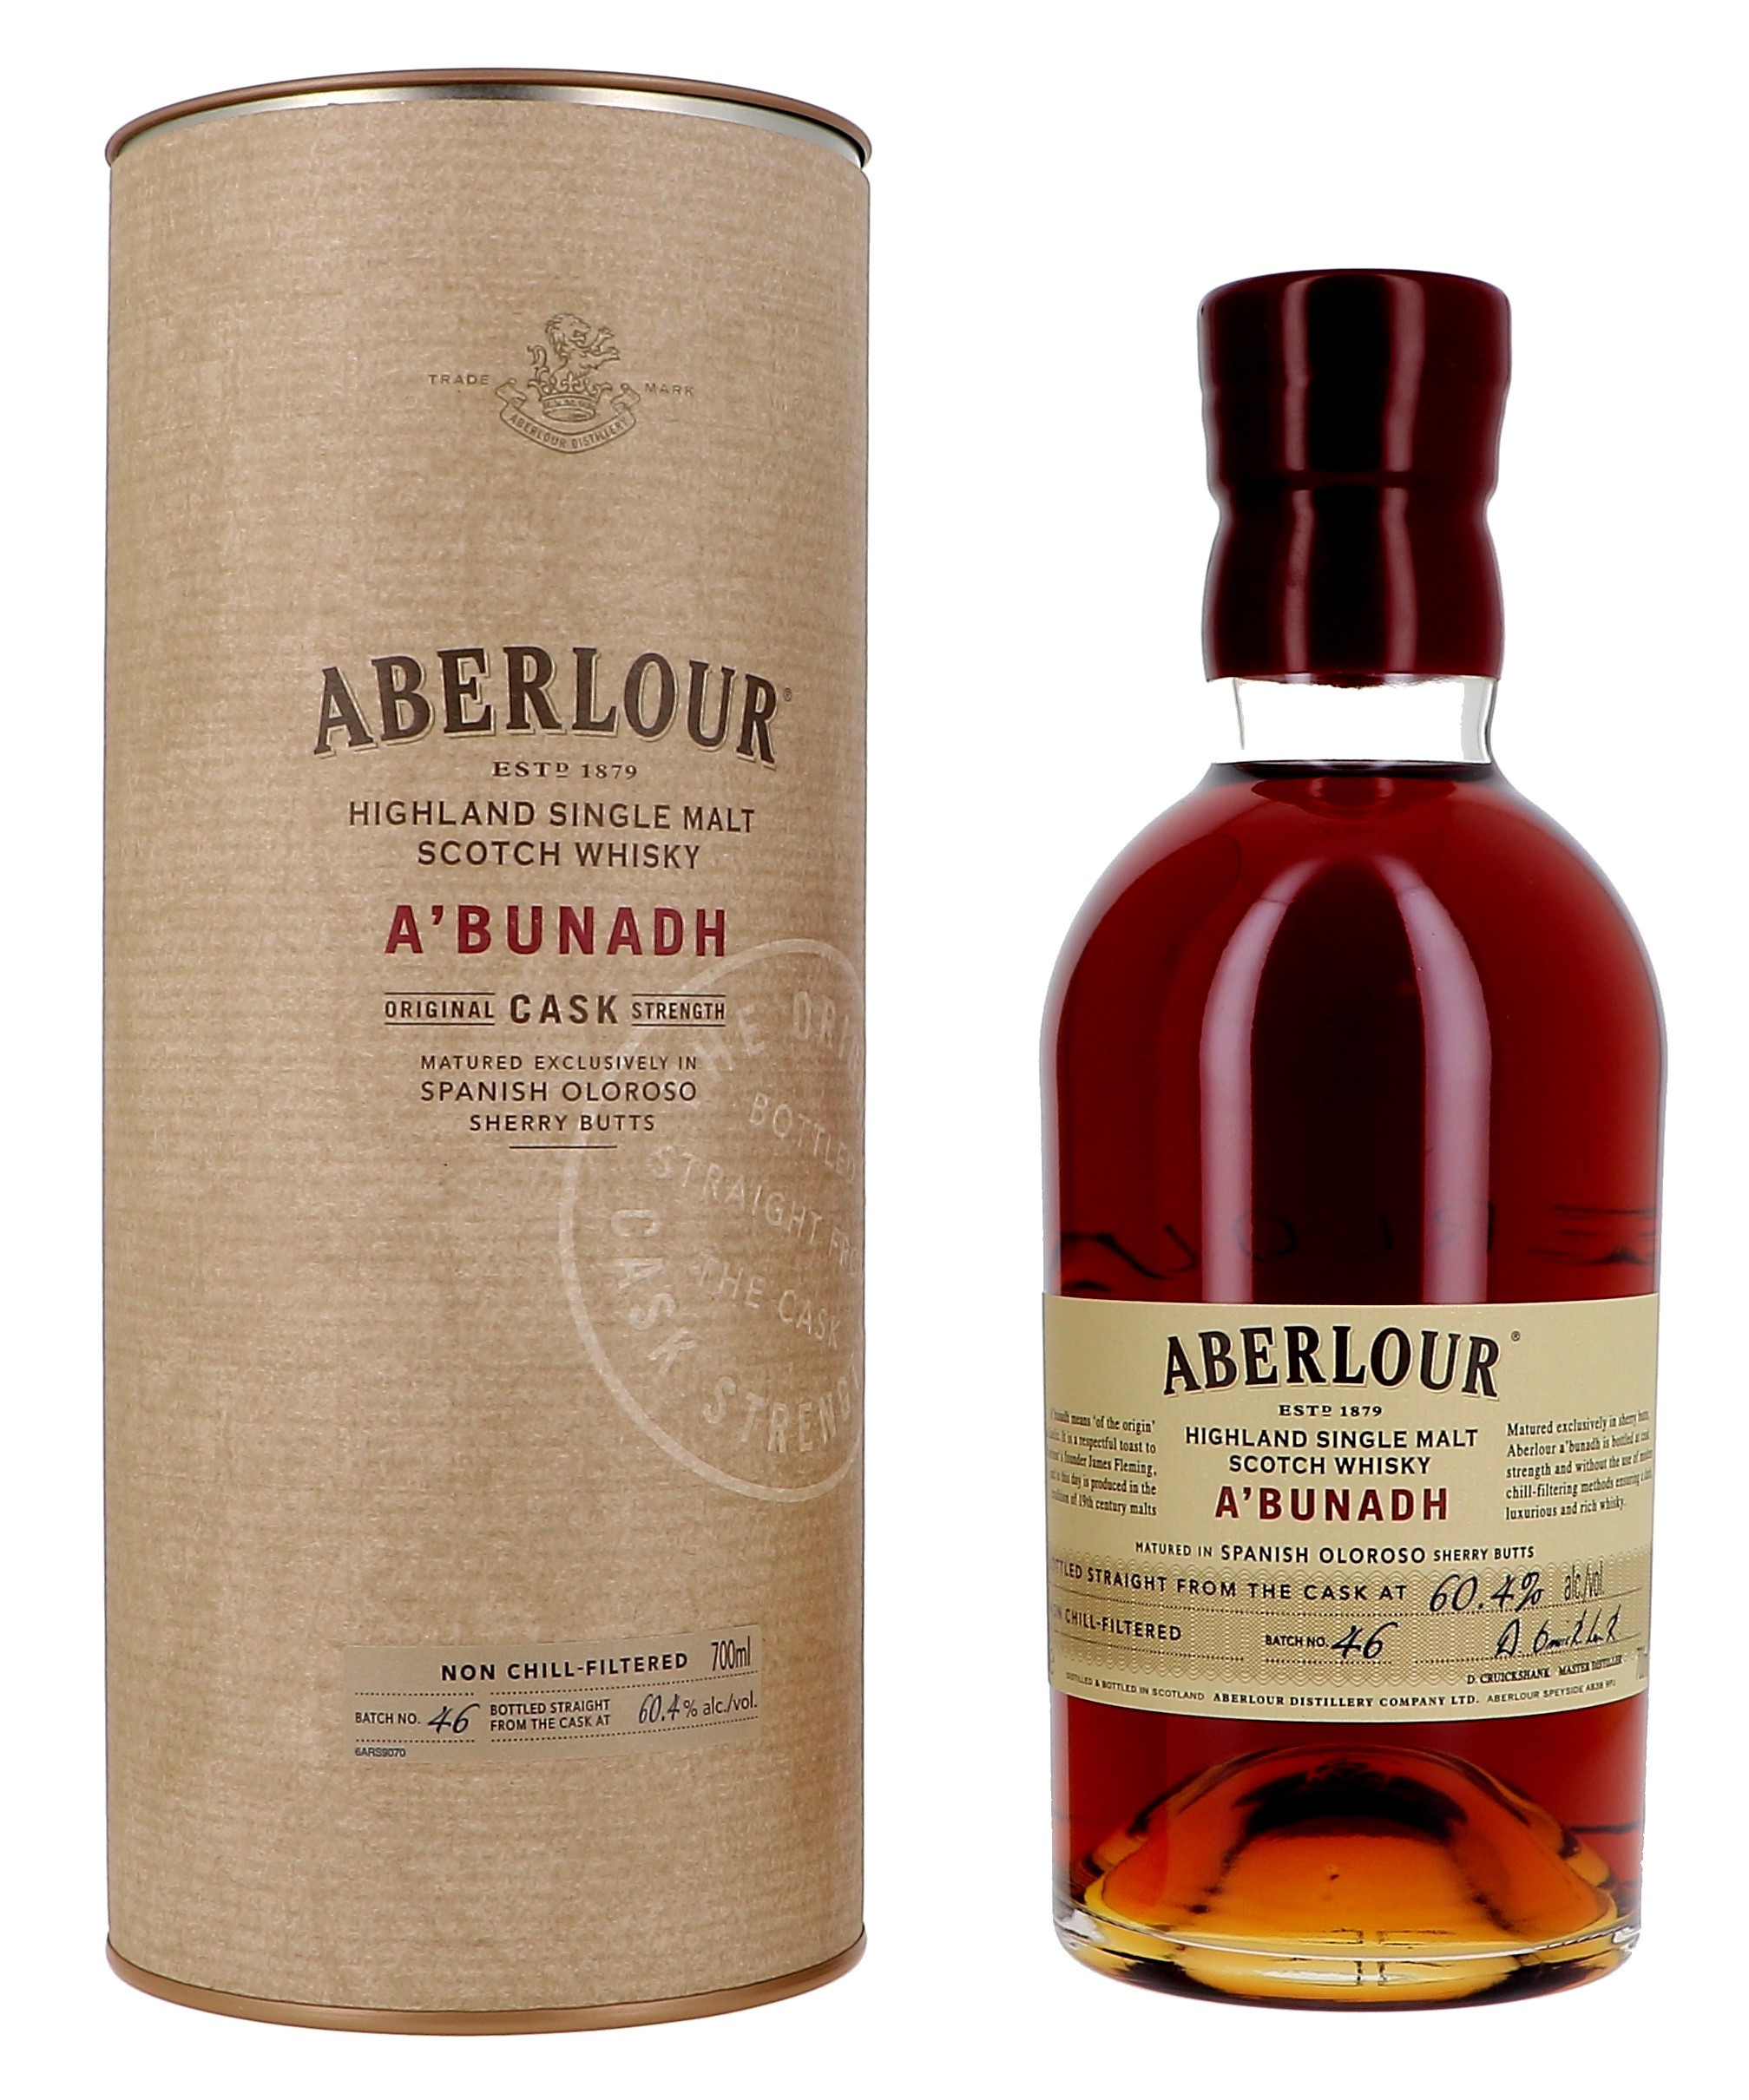 Aberlour A'Bunadh Cask Strenght 70cl 59.6% Highland Single Malt Scotch Whisky (Whisky)